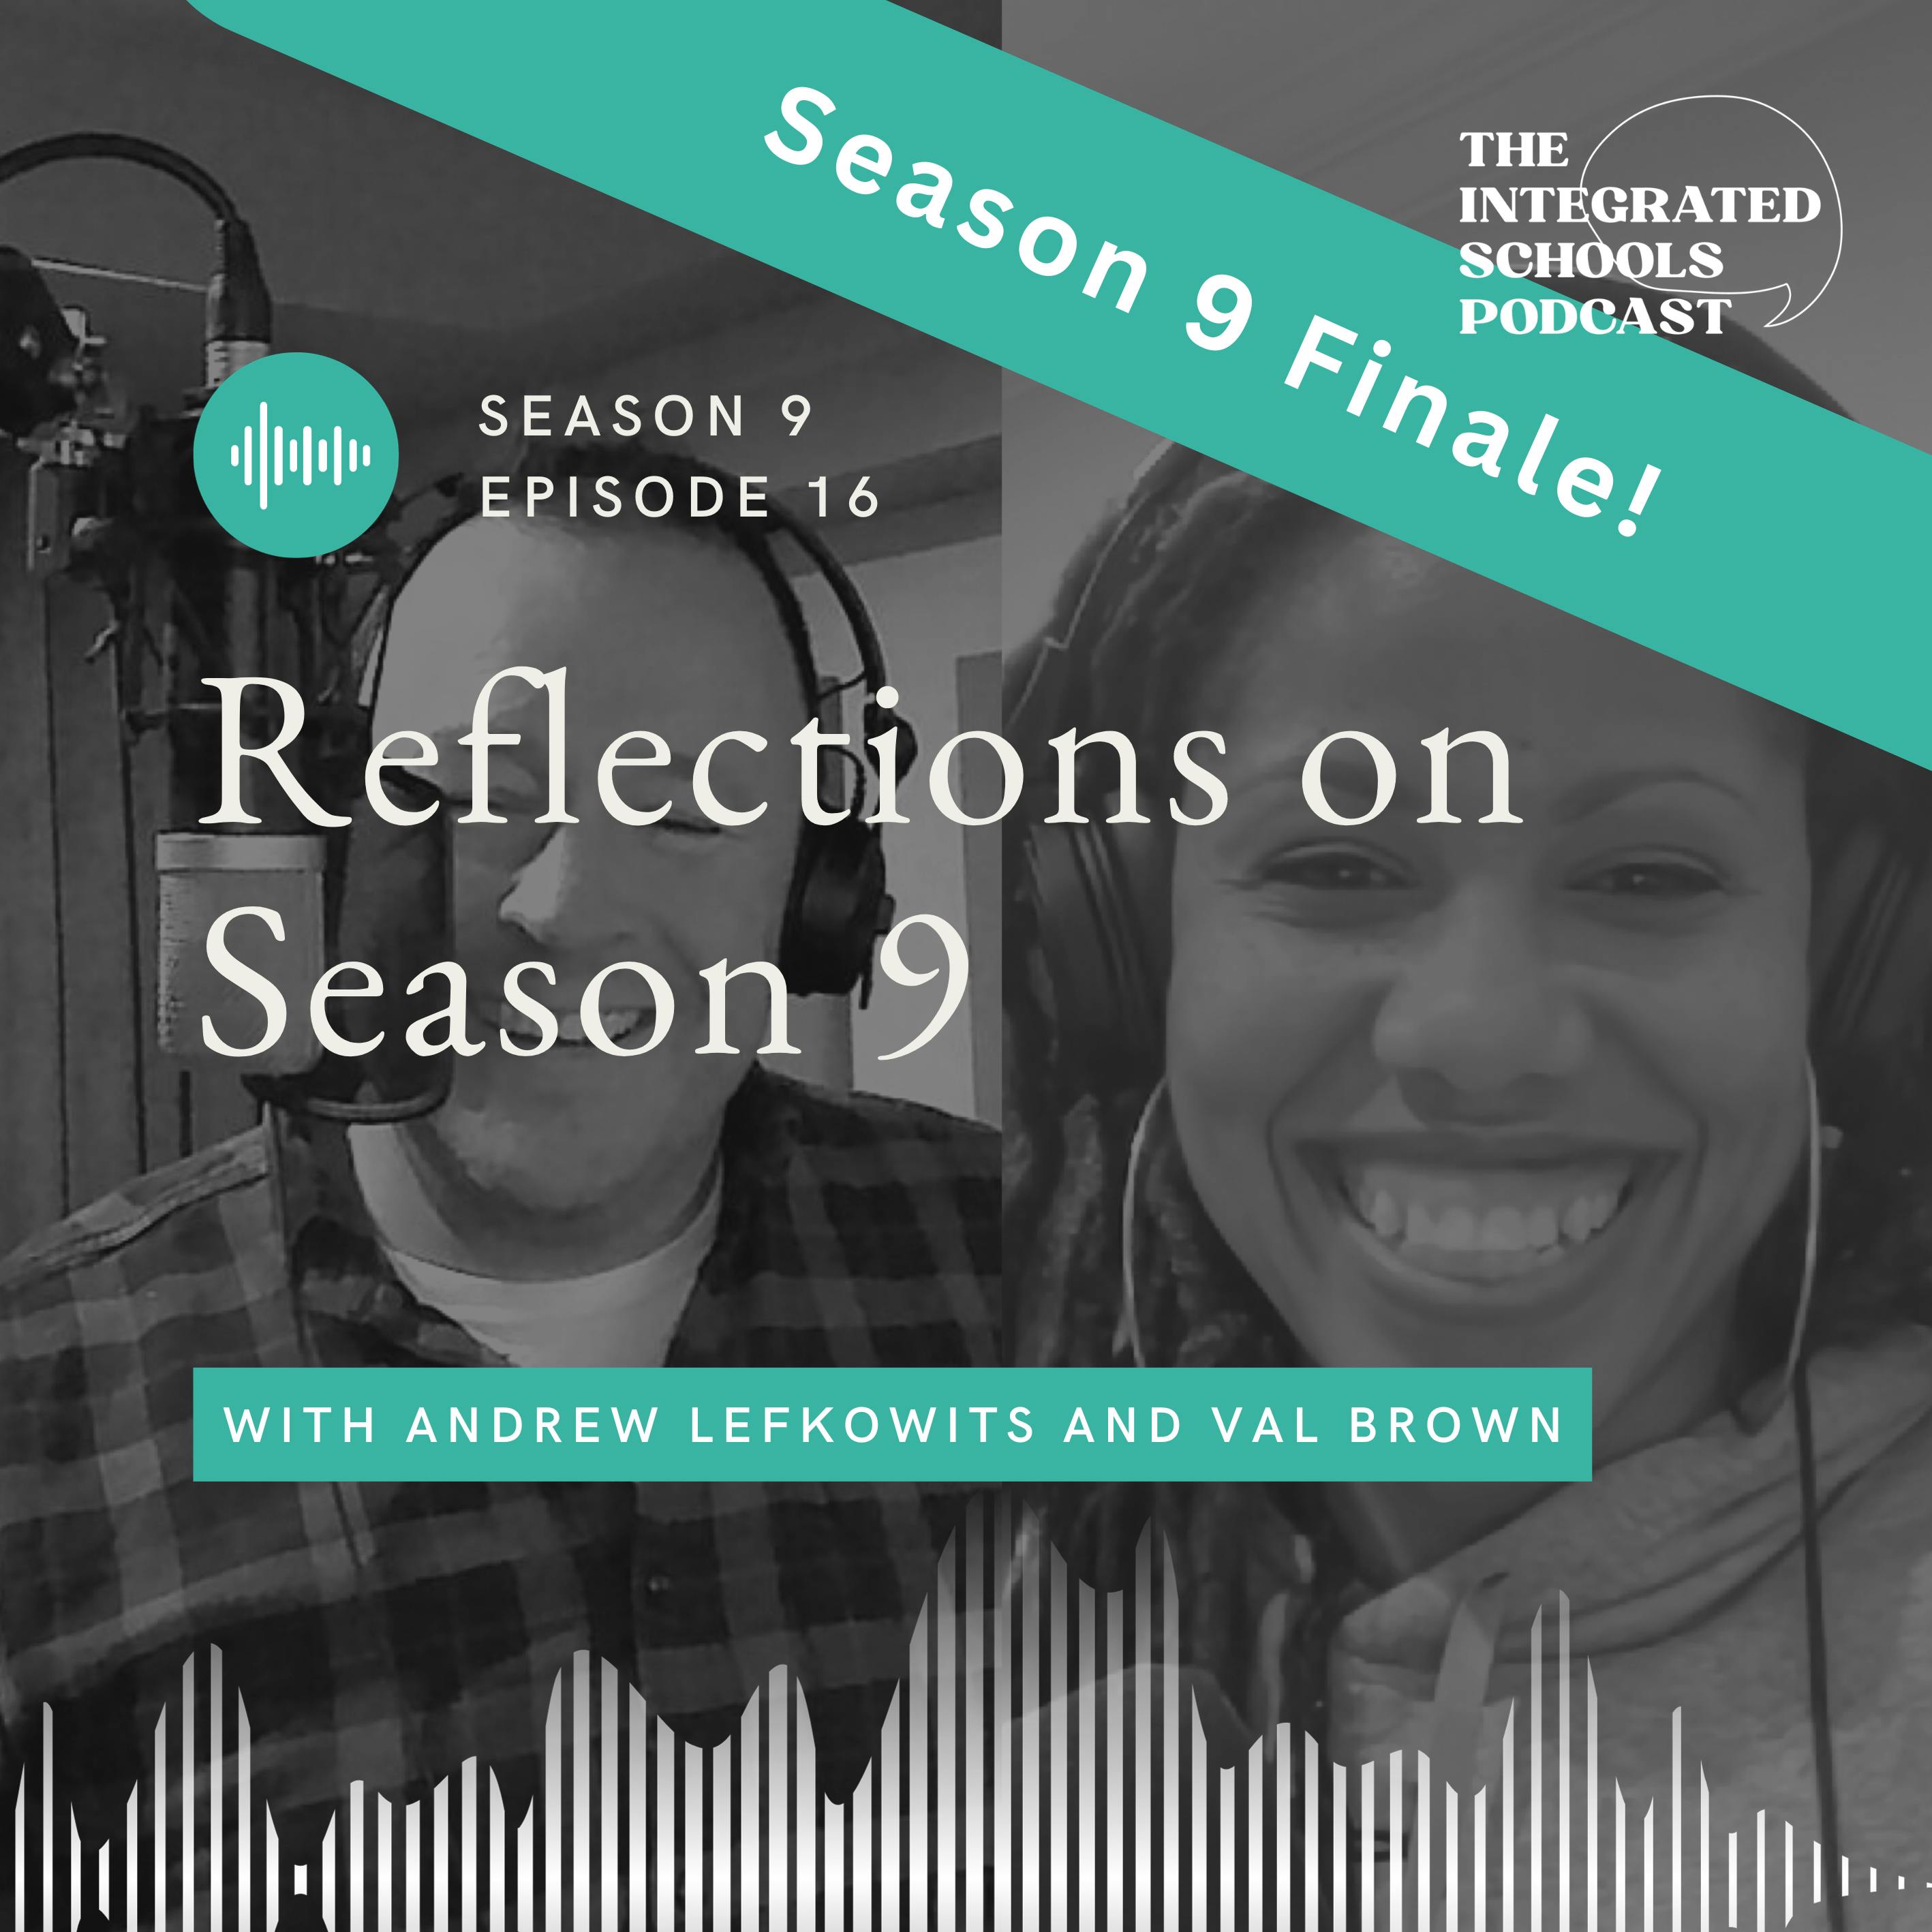 Reflections on Season 9